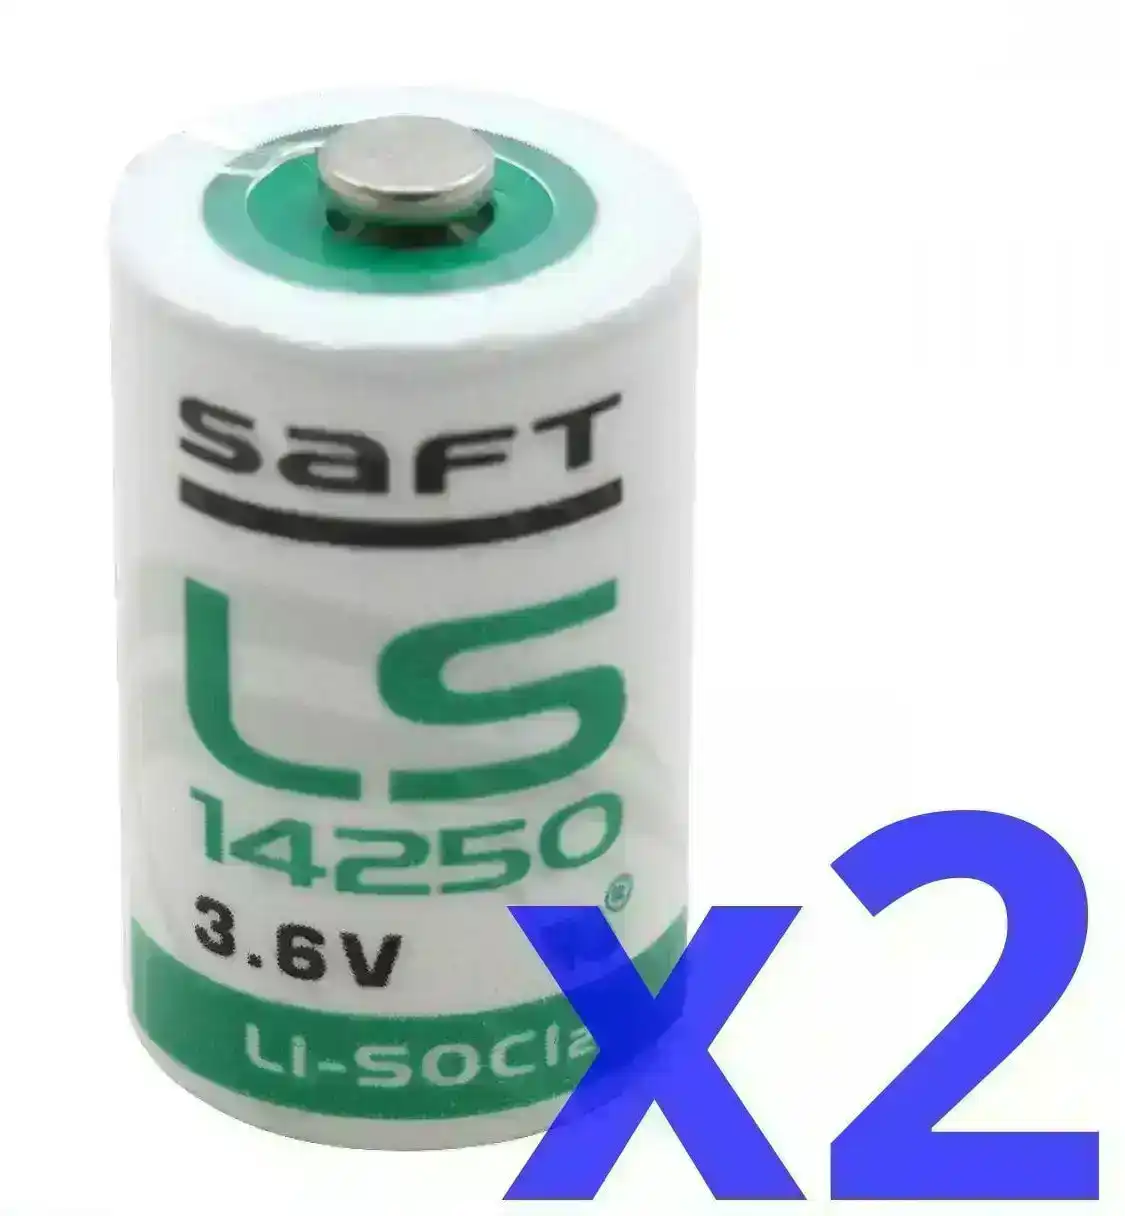 2 Pack | 3.6V 1/2 AA Lithium Battery 1.2Ah, Saft LS14250, R6 Li-SOCl2